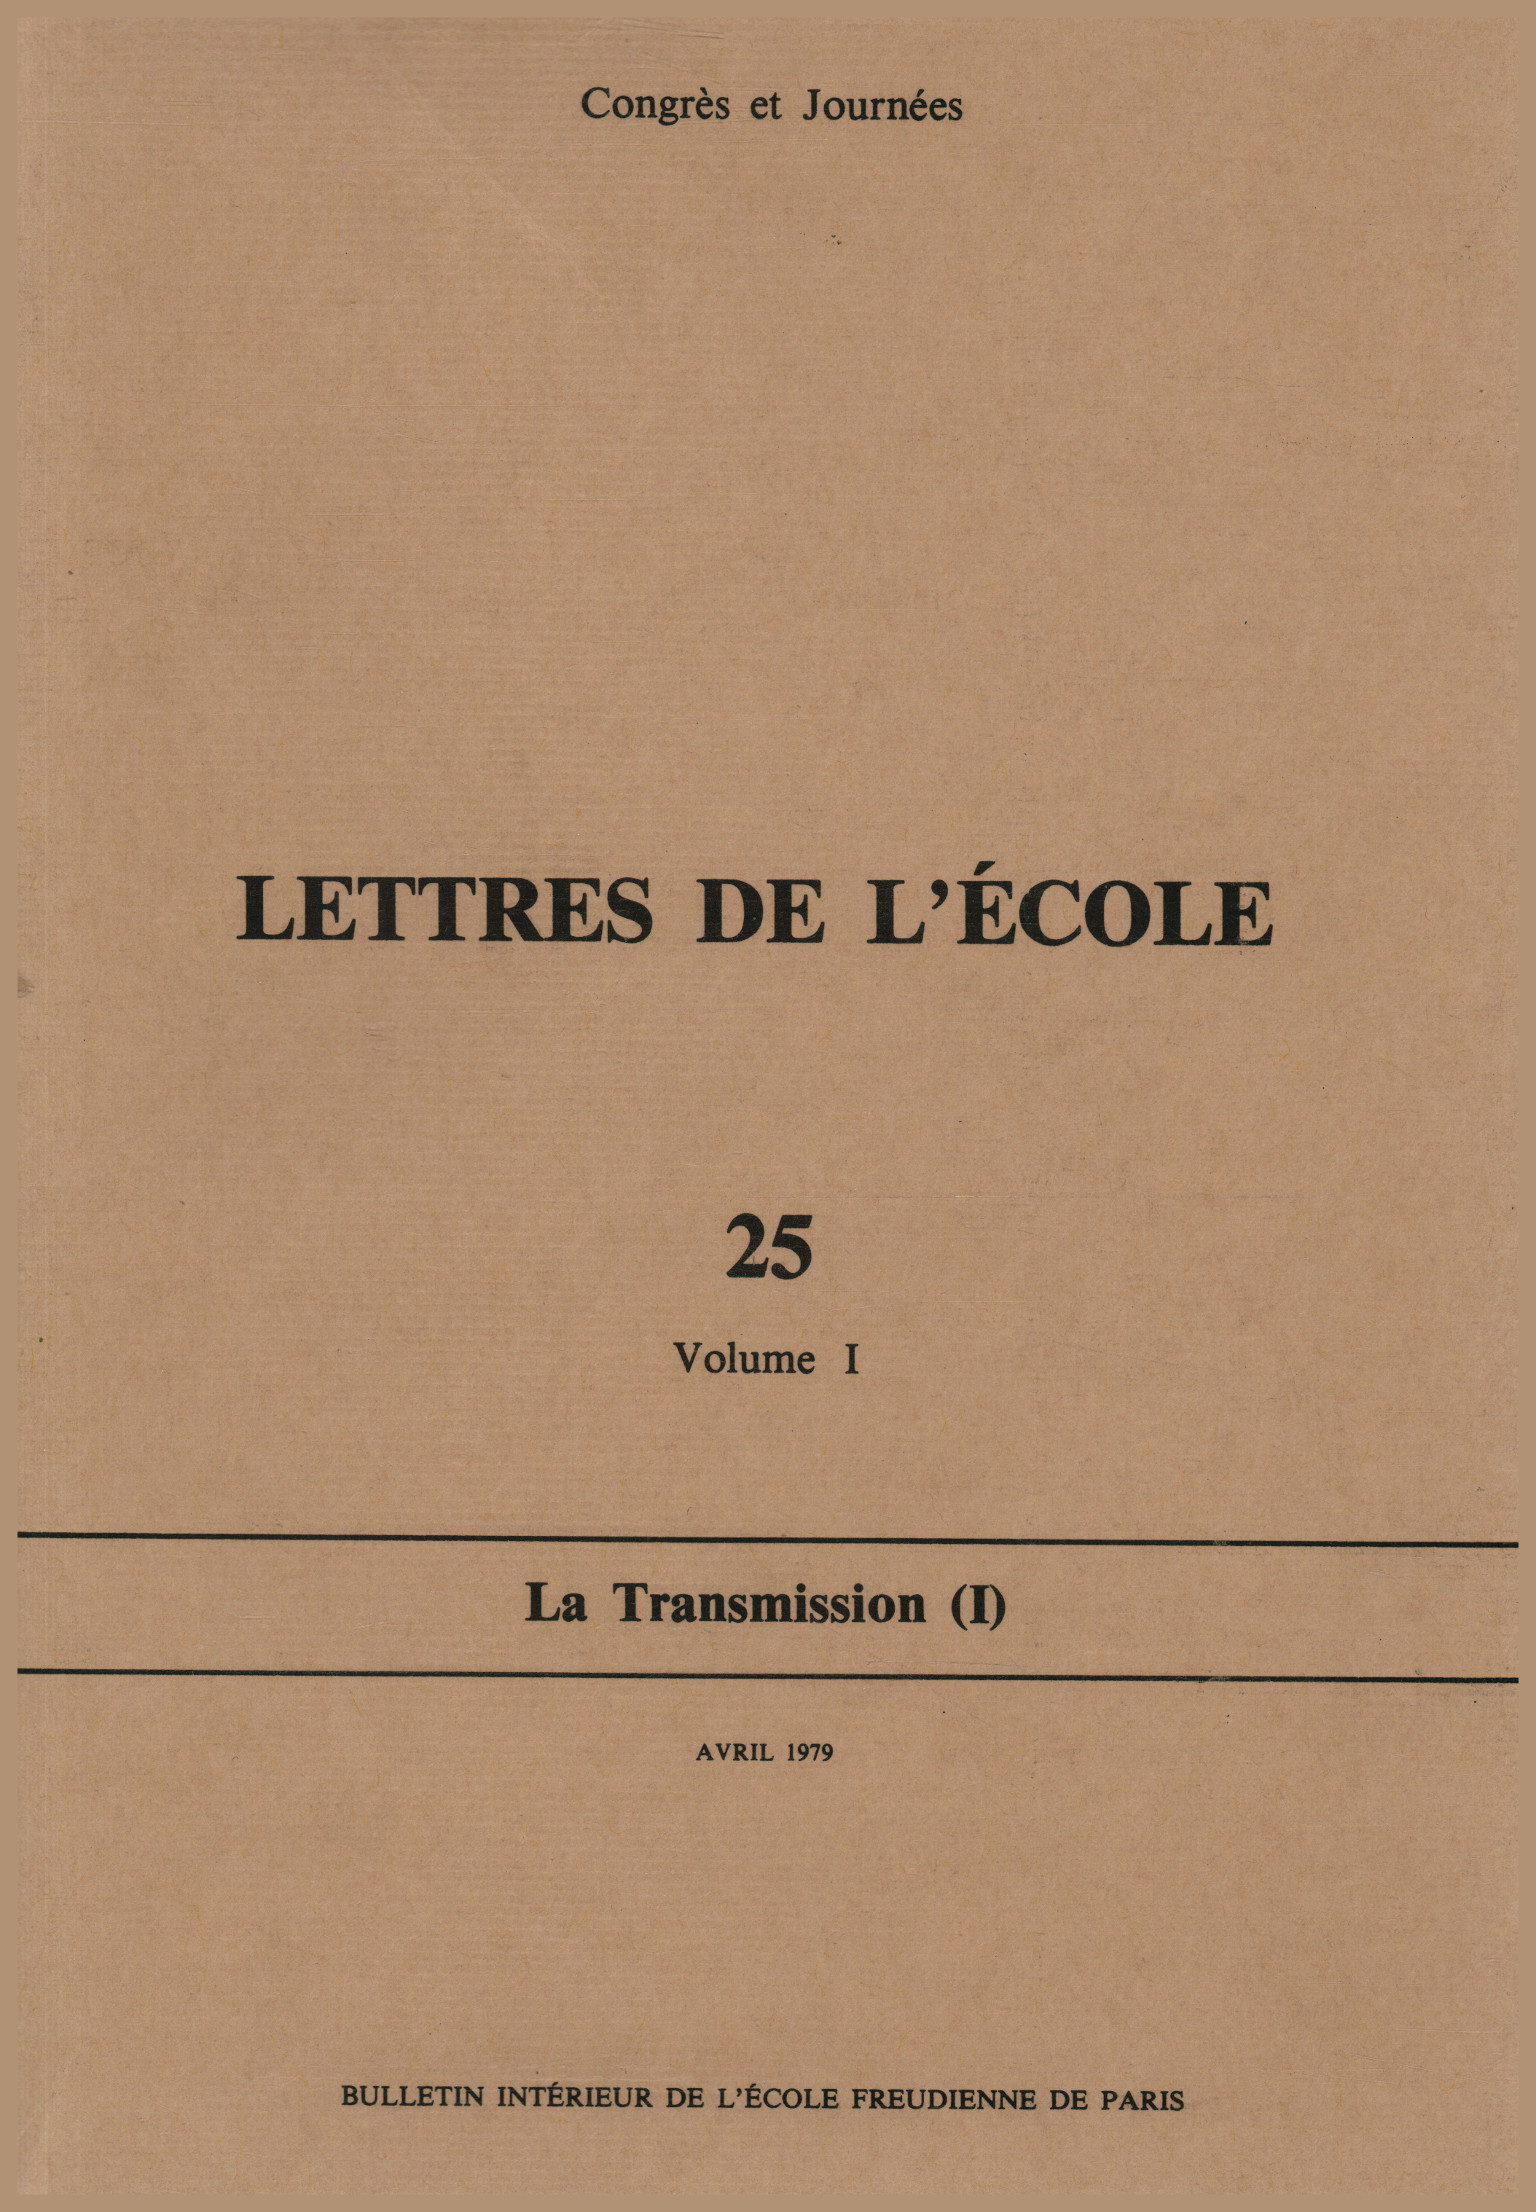 Lettres de l'ècole. Volume I, AA.VV